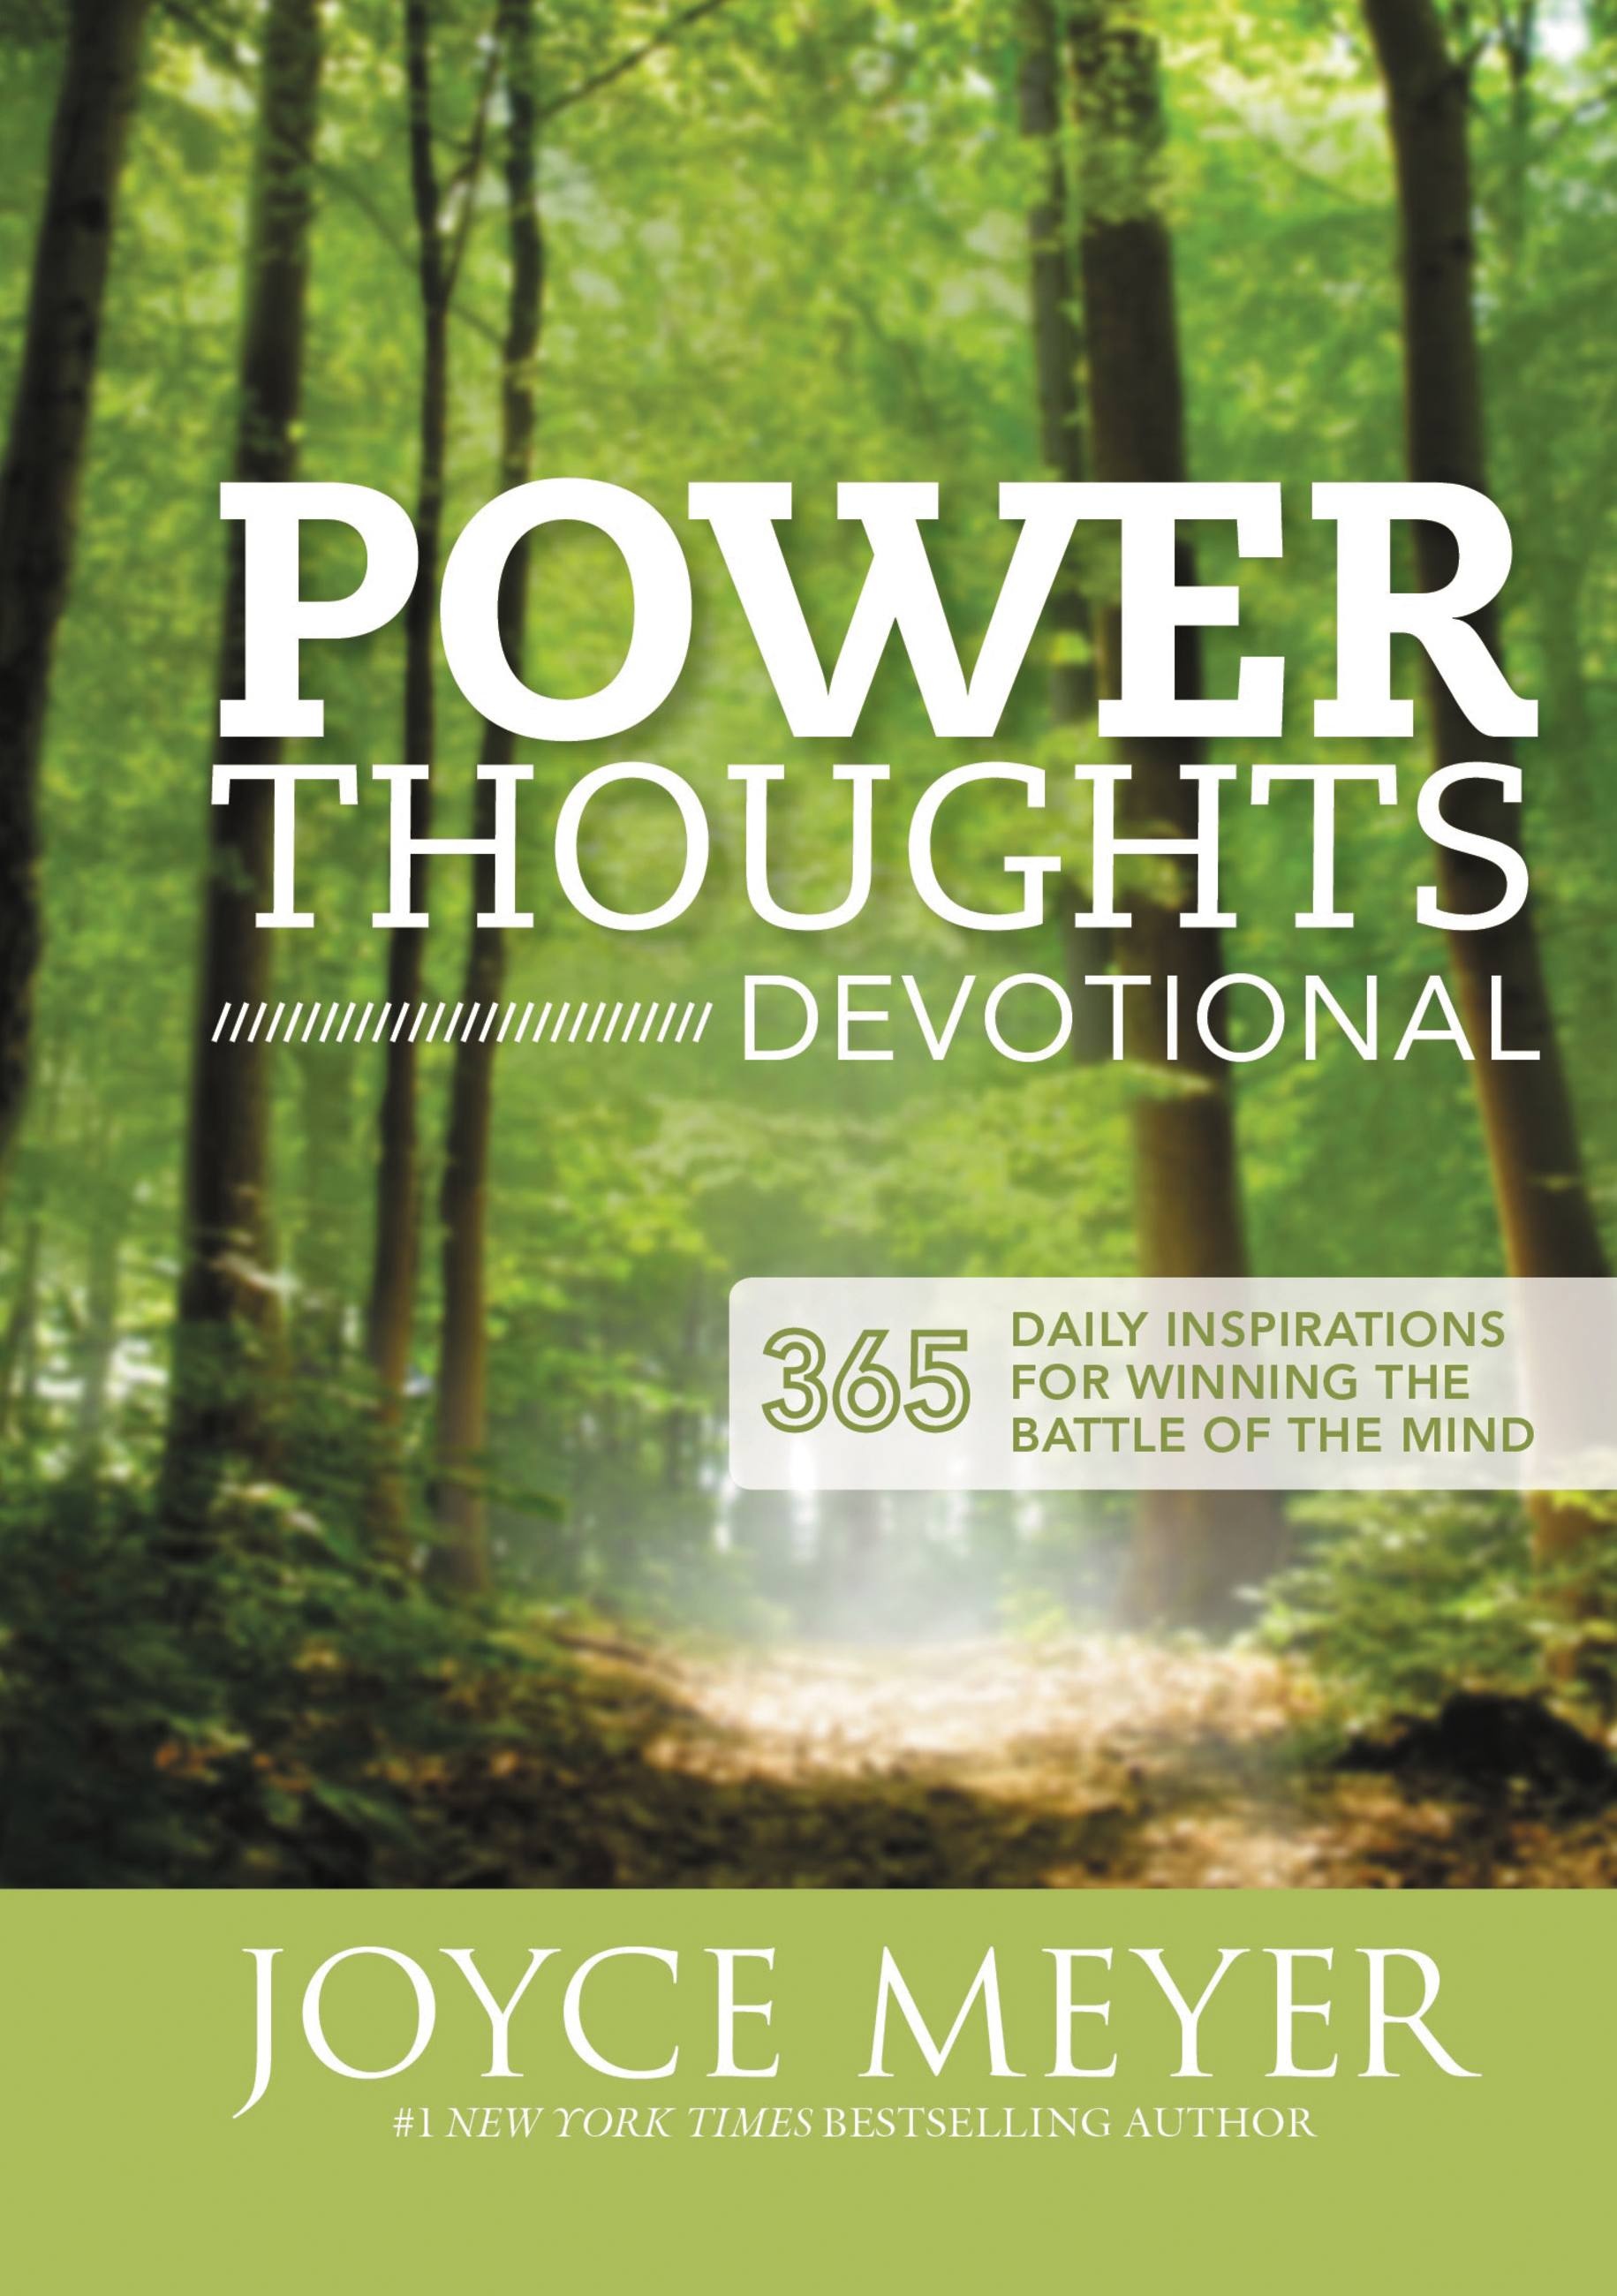 DOWNLOAD PDF: Power Thoughts Devotional by Joyce Meyer 17